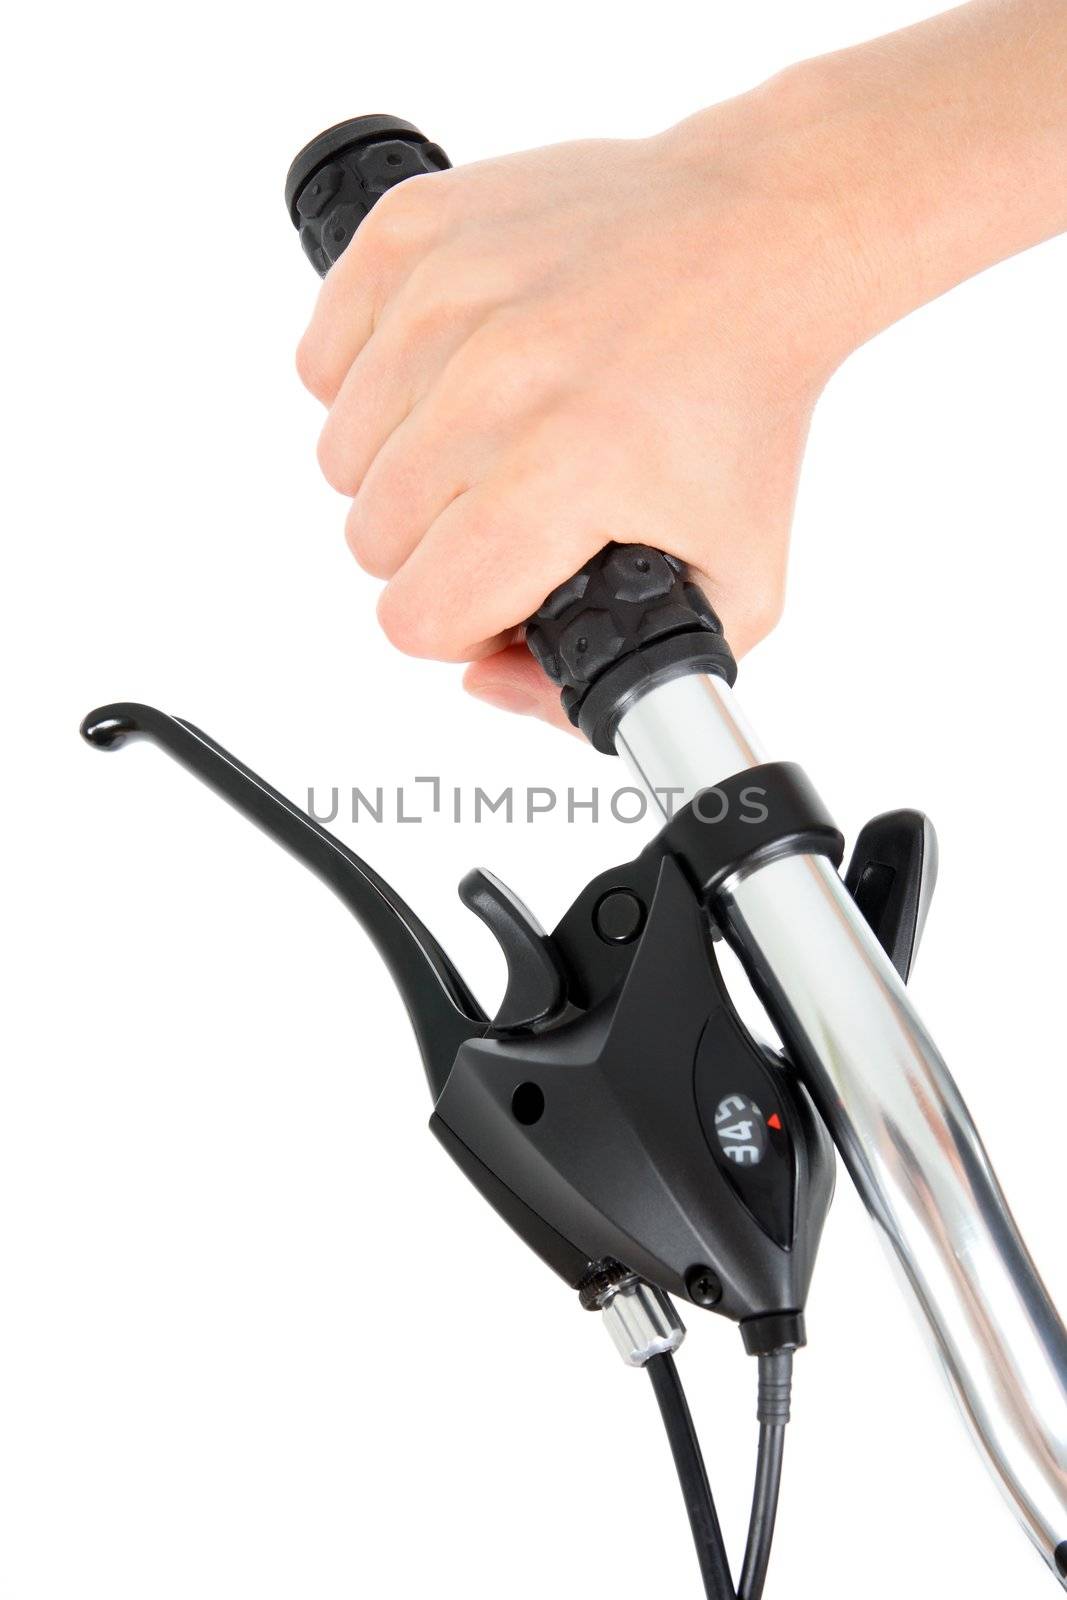 Hand holding bicycle handlebar, isolated on white.